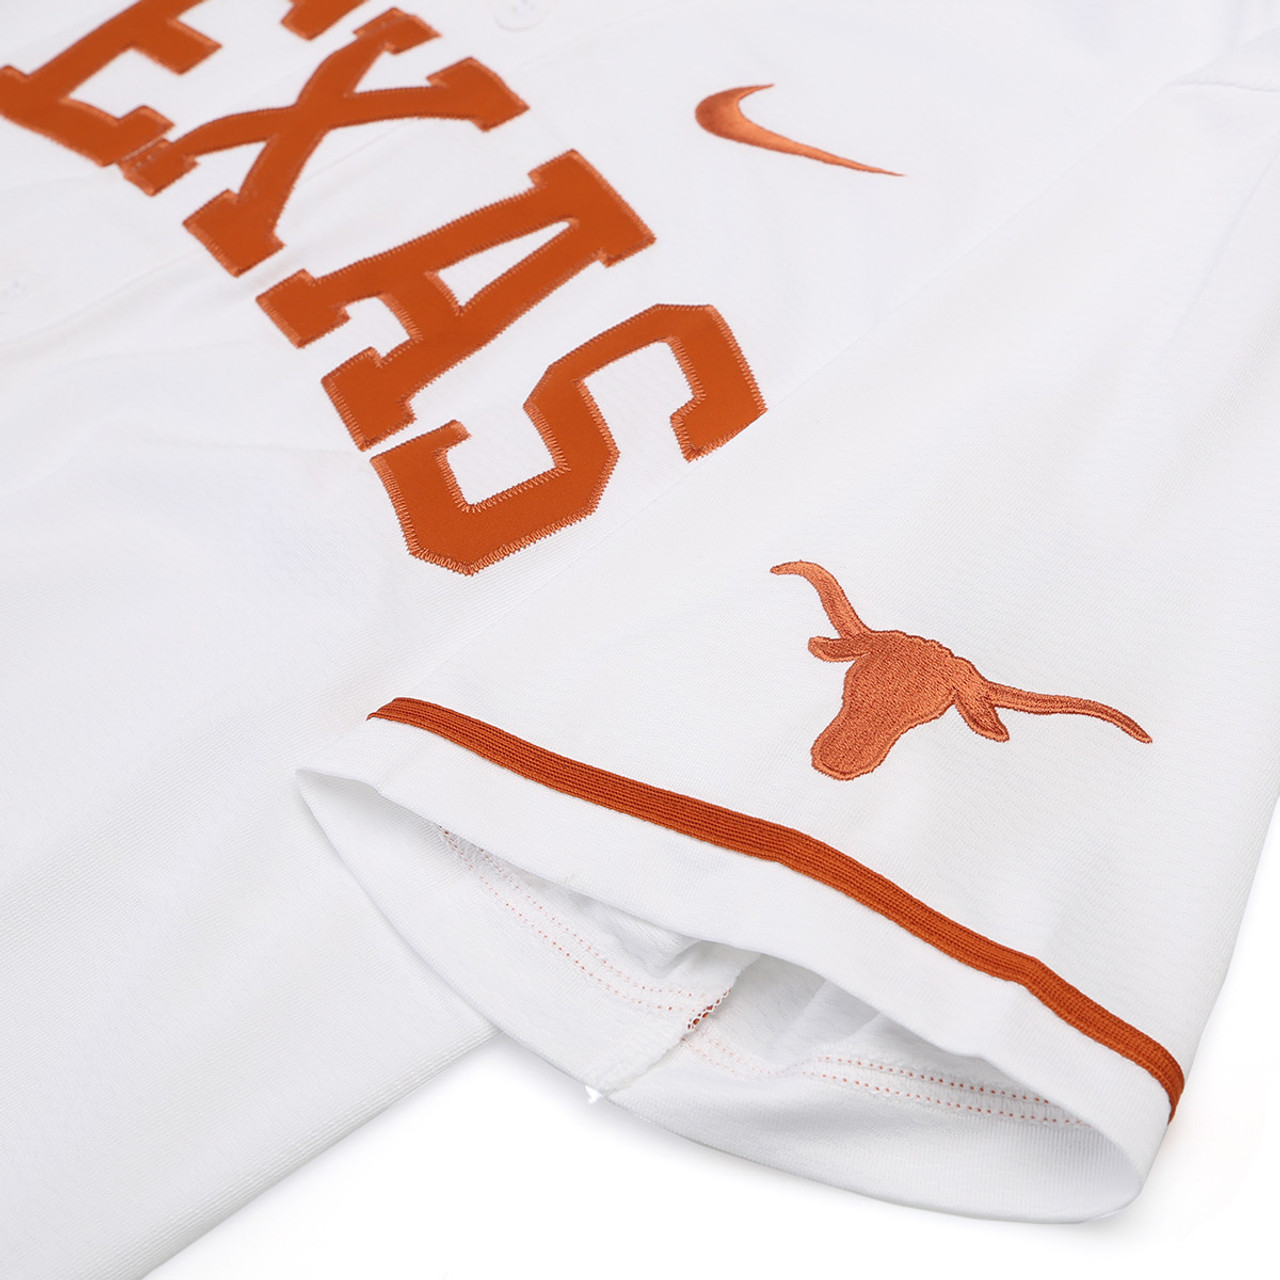 Men's Nike Natural Texas Longhorns Replica Full-Button Baseball Jersey